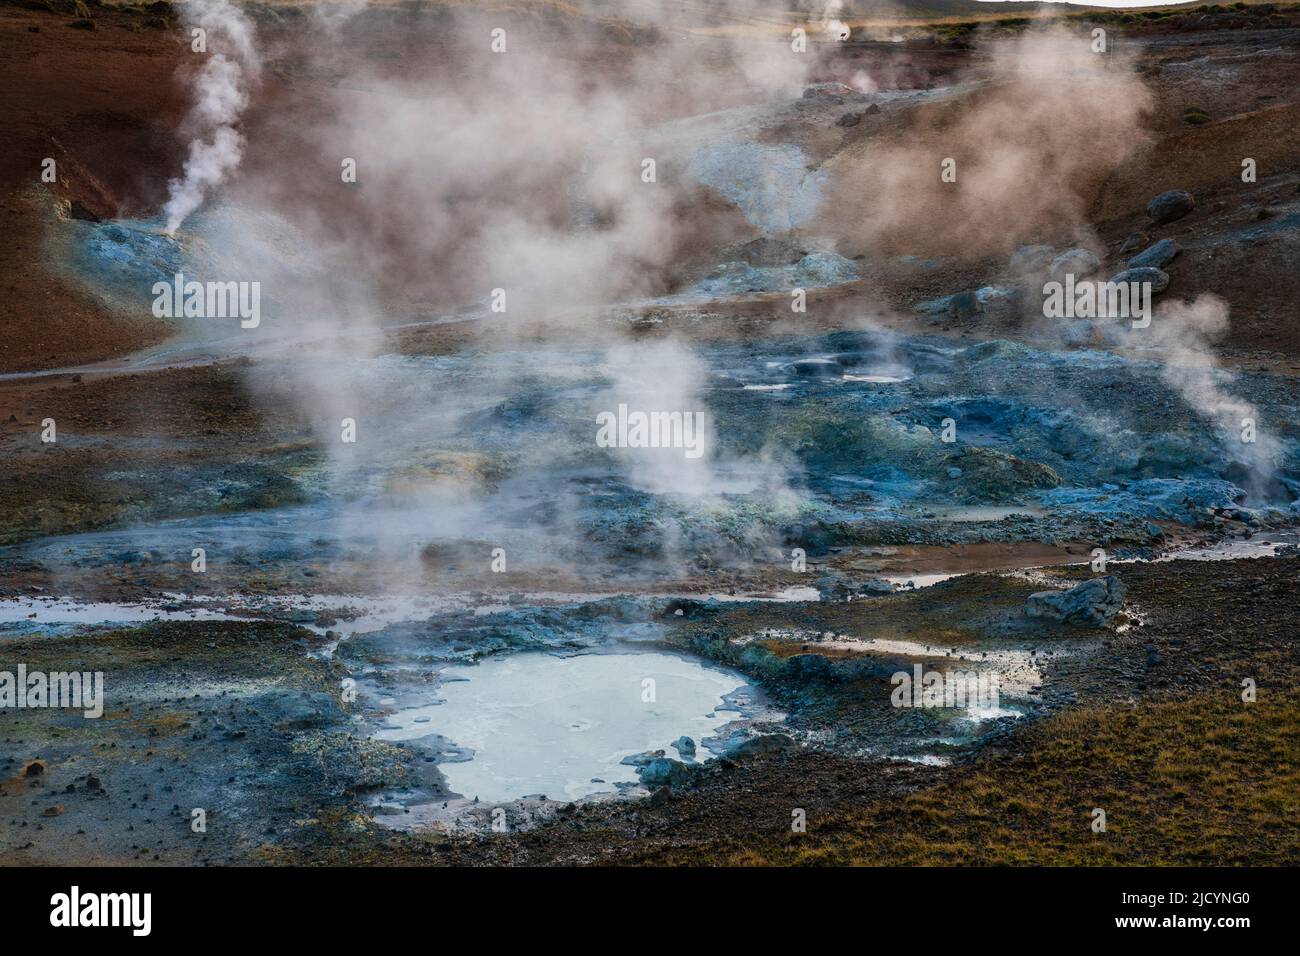 Seltun geothermal area, Krysuvik, Reykjanes peninsula, Iceland. Stock Photo